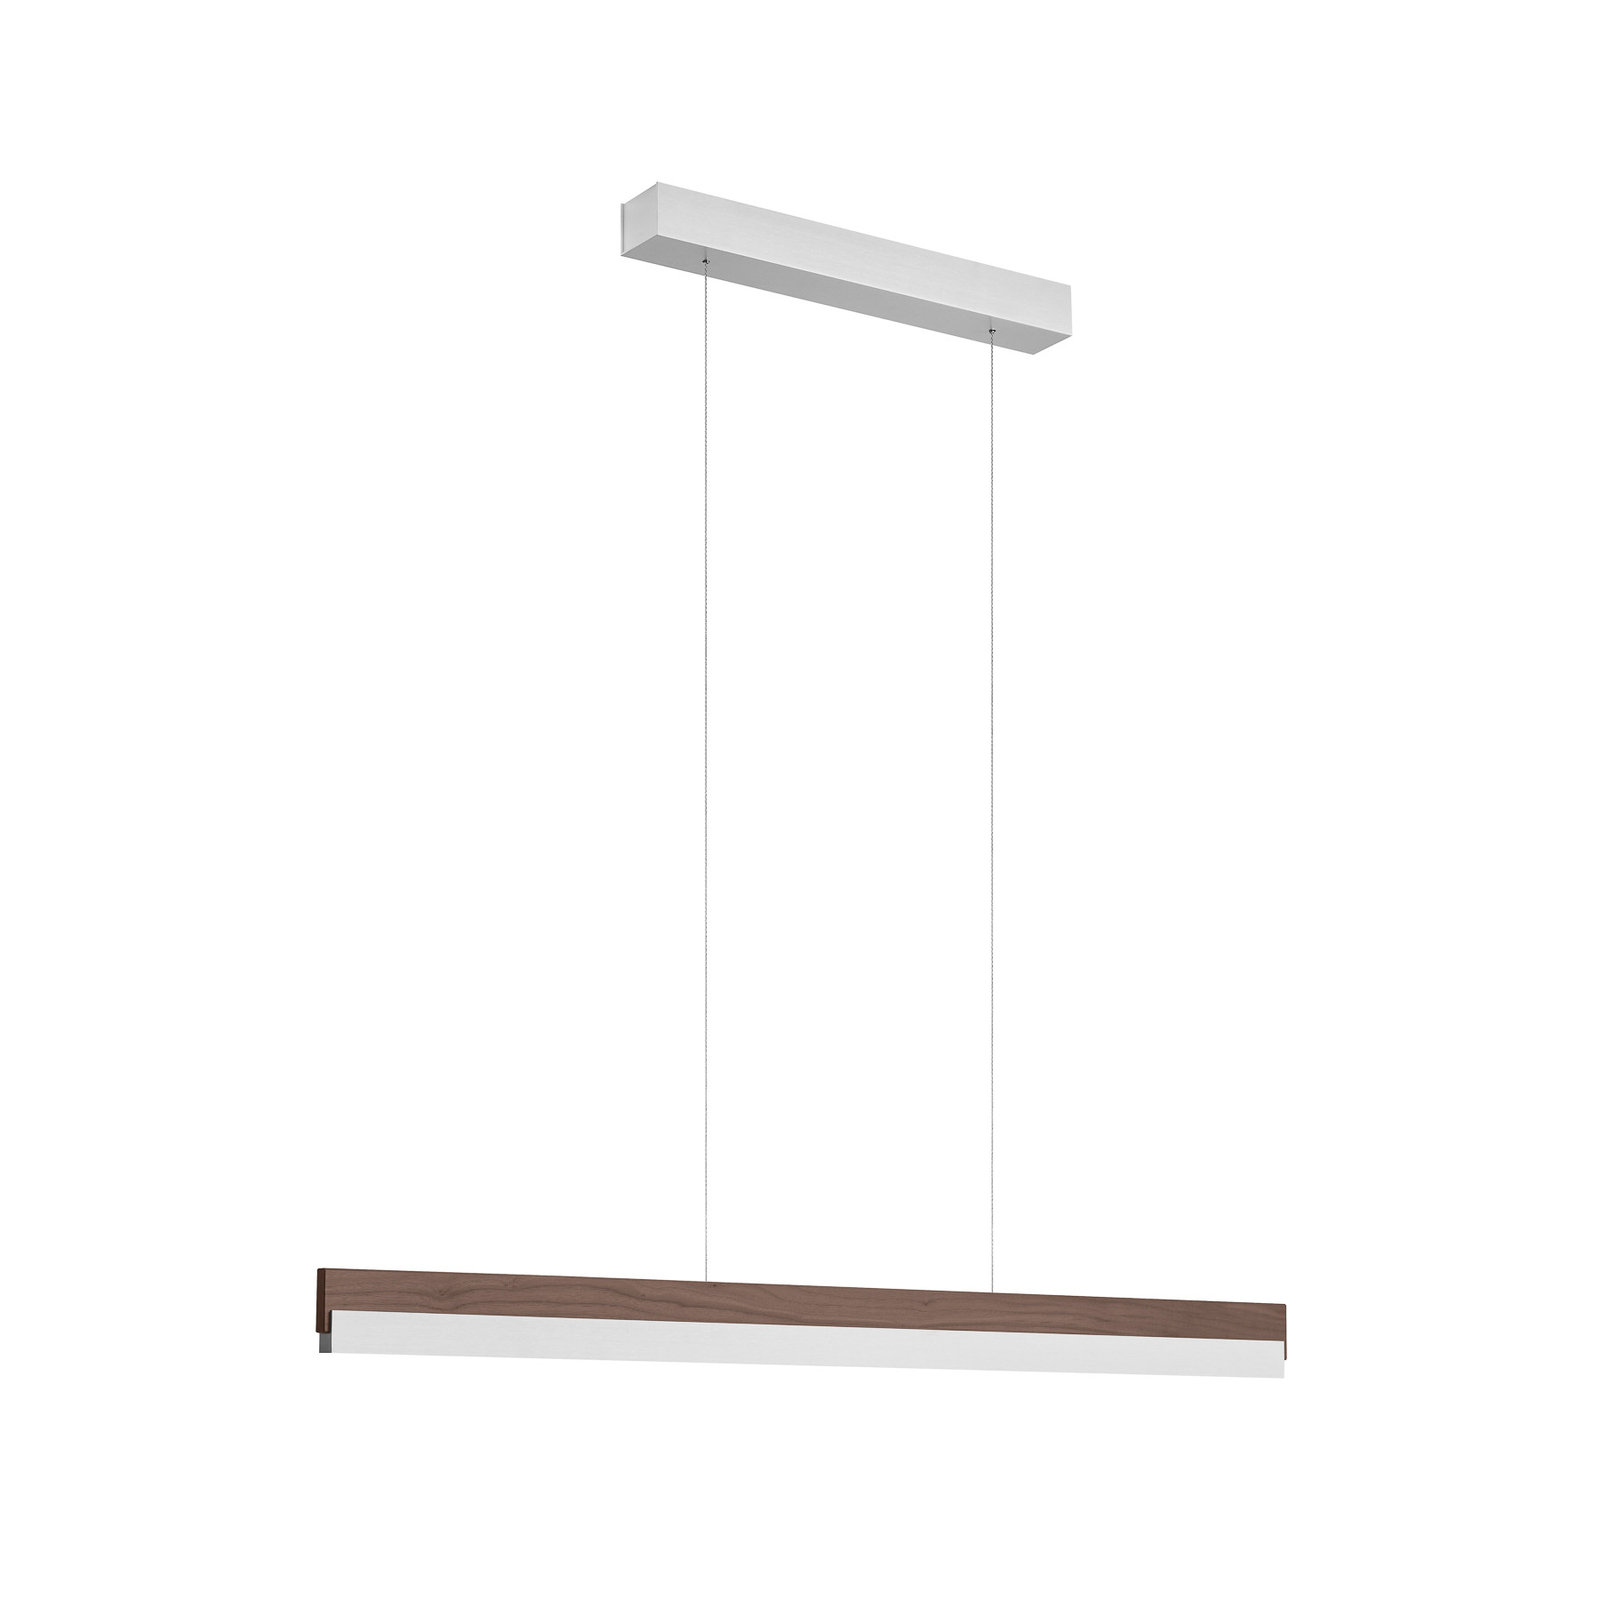 Quitani hanglamp Keijo, nikkel/noot, 103 cm